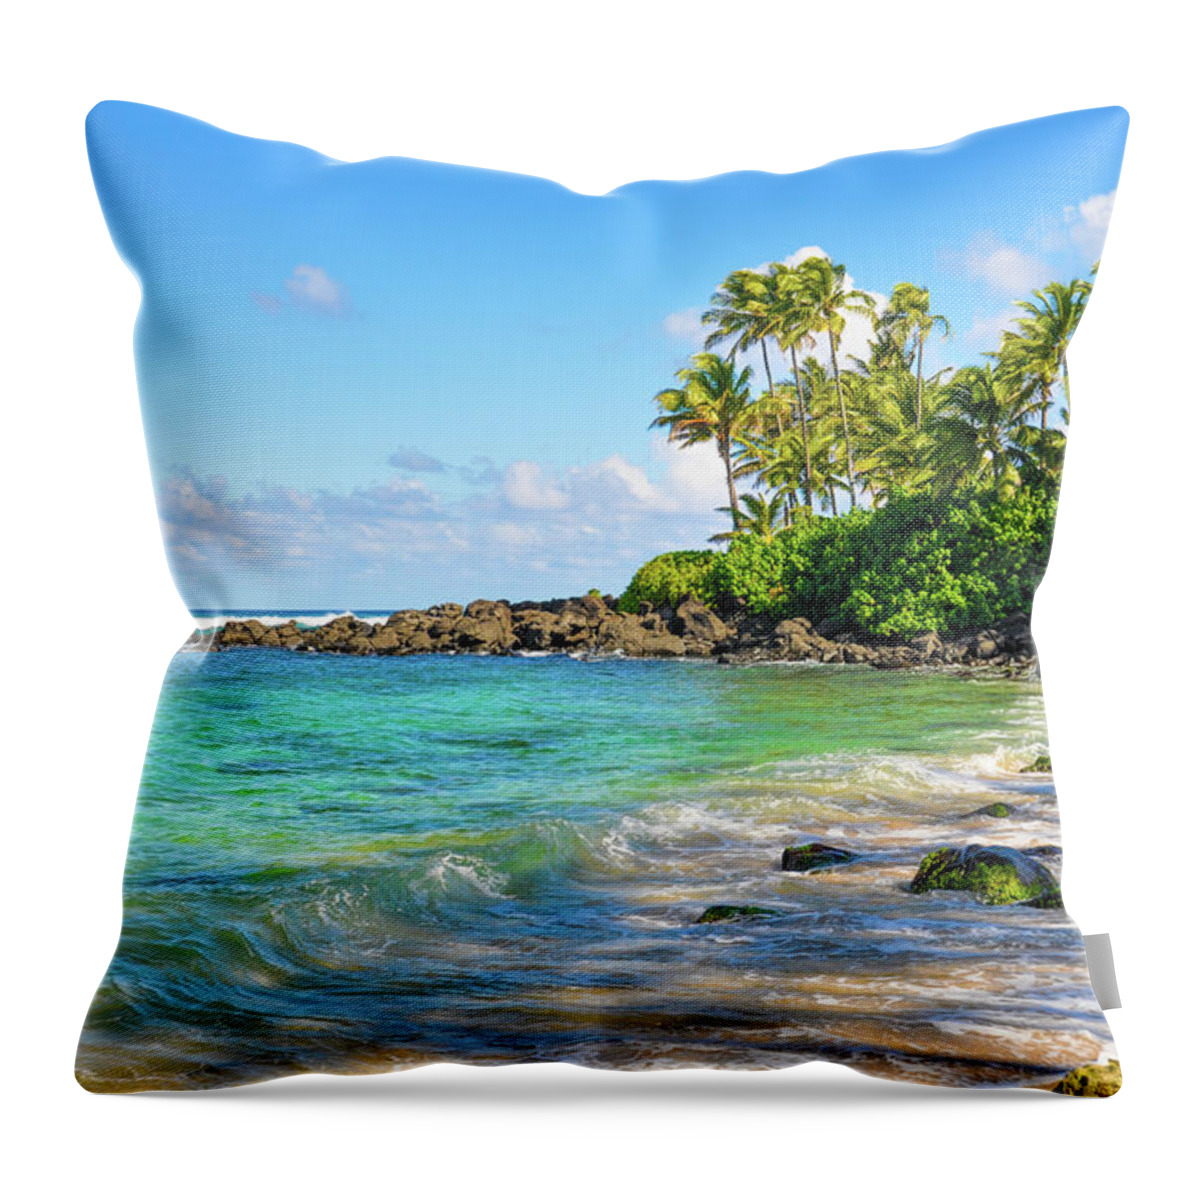 Turtle Beach Laniakea Beach Oahu Hawaii Throw Pillow featuring the photograph Turtle Beach by Kelly Wade